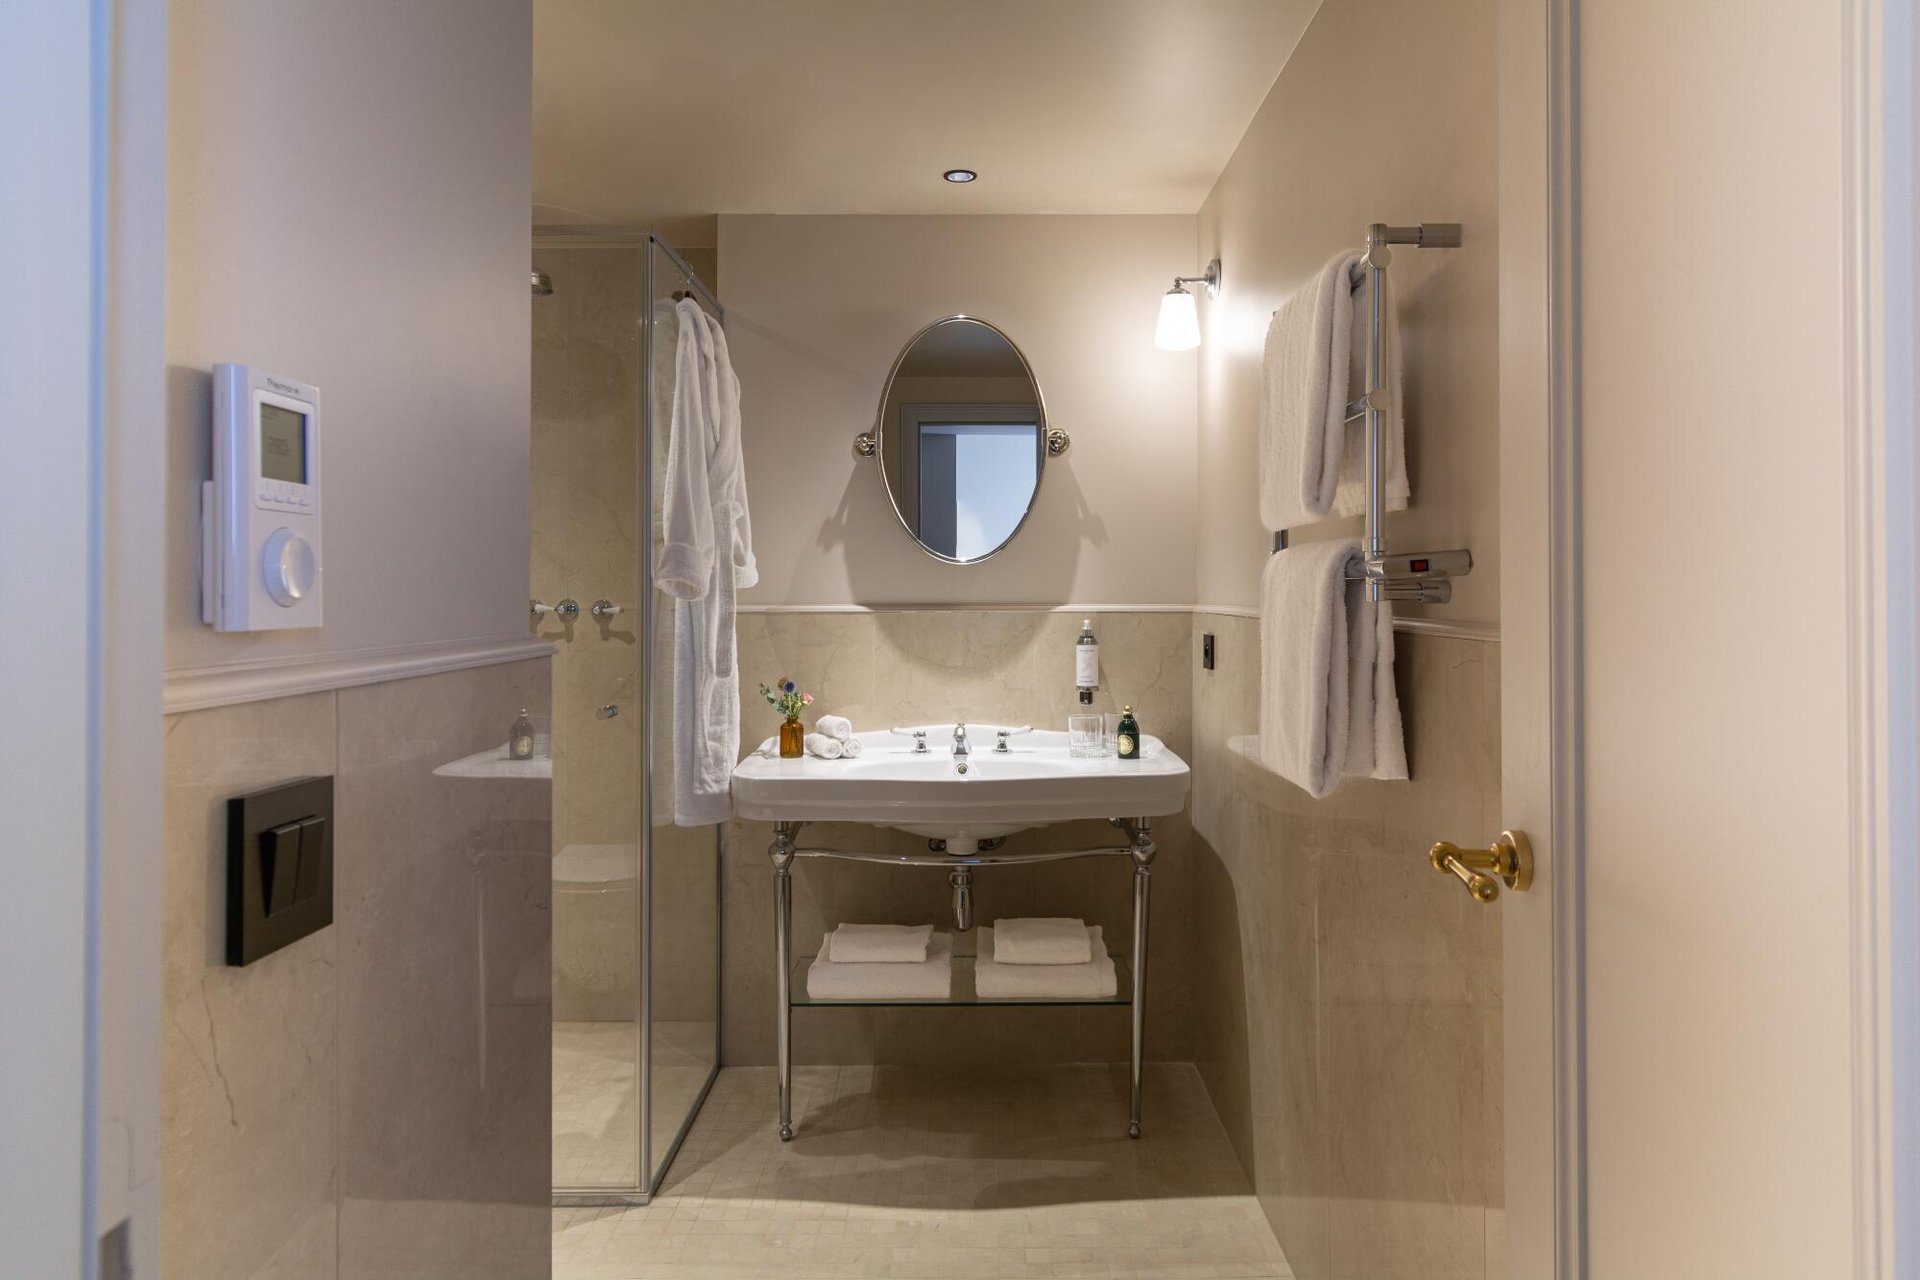 Hôtel & Spa Napoléon Suite Bathroom Shower